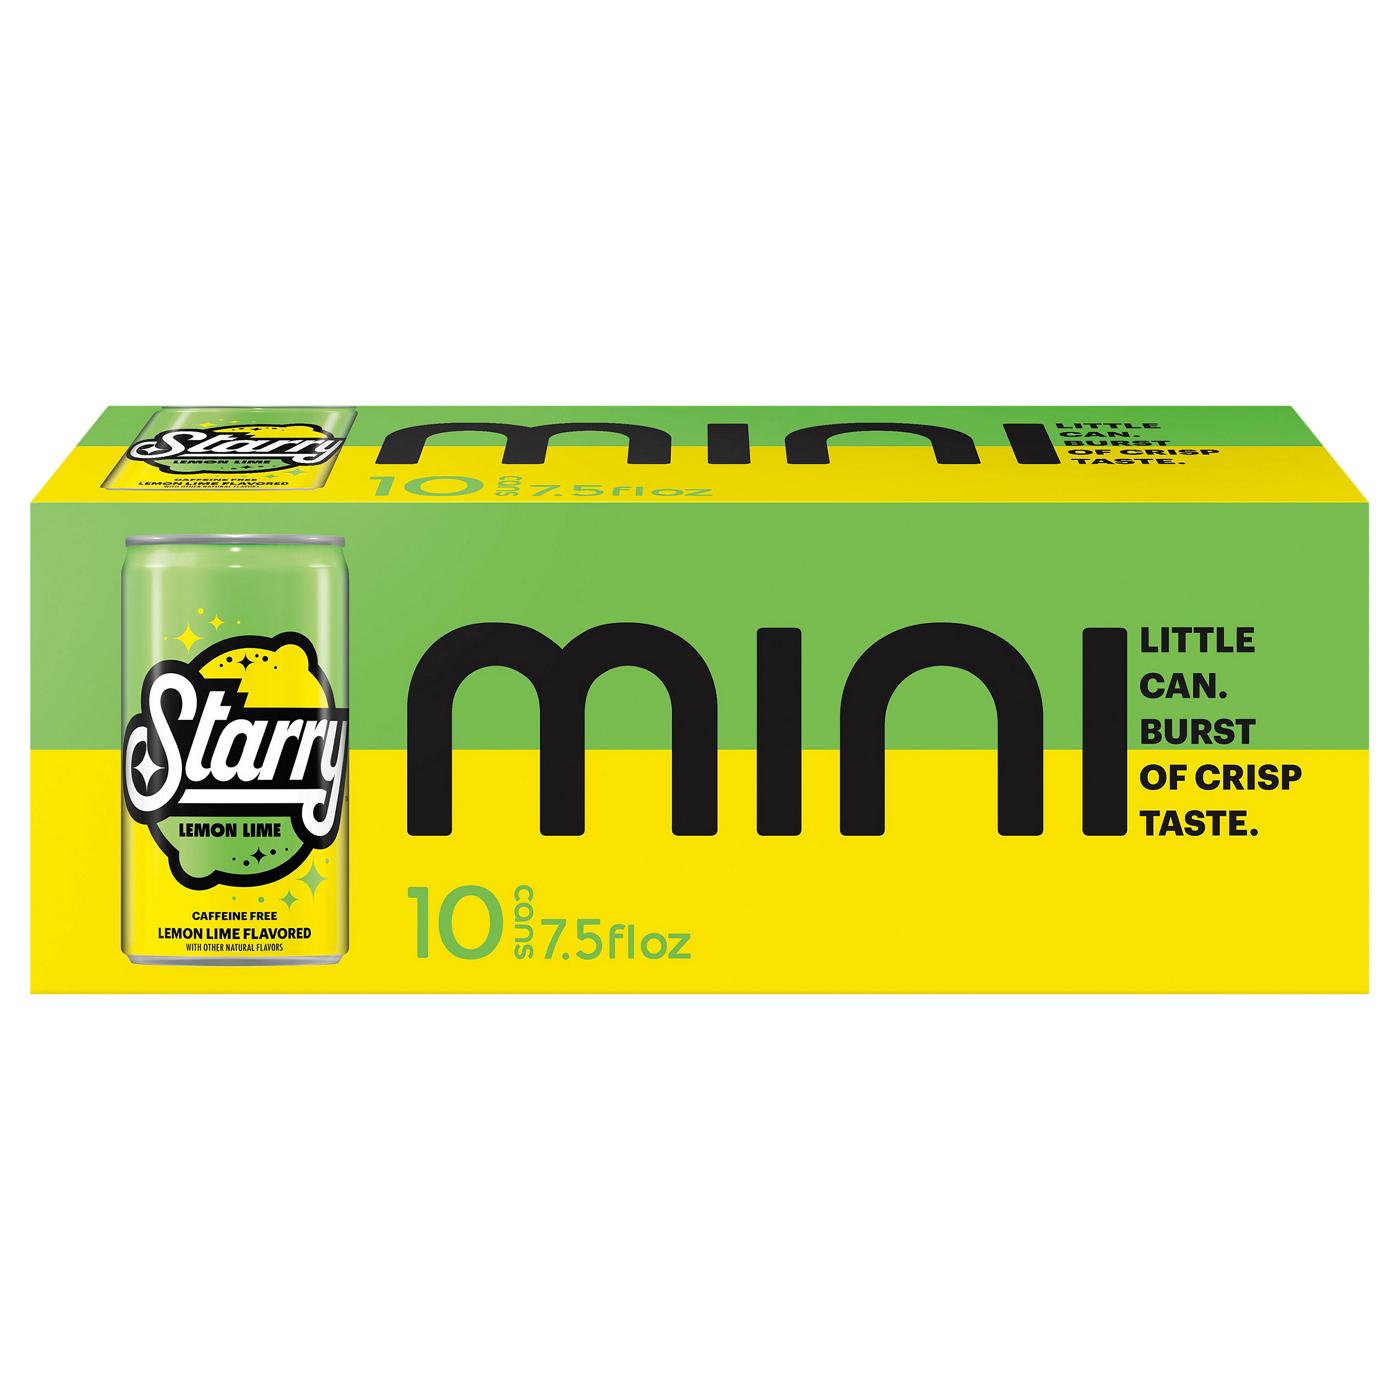 Starry Lemon Lime Soda Mini 7.5 oz Cans; image 1 of 2